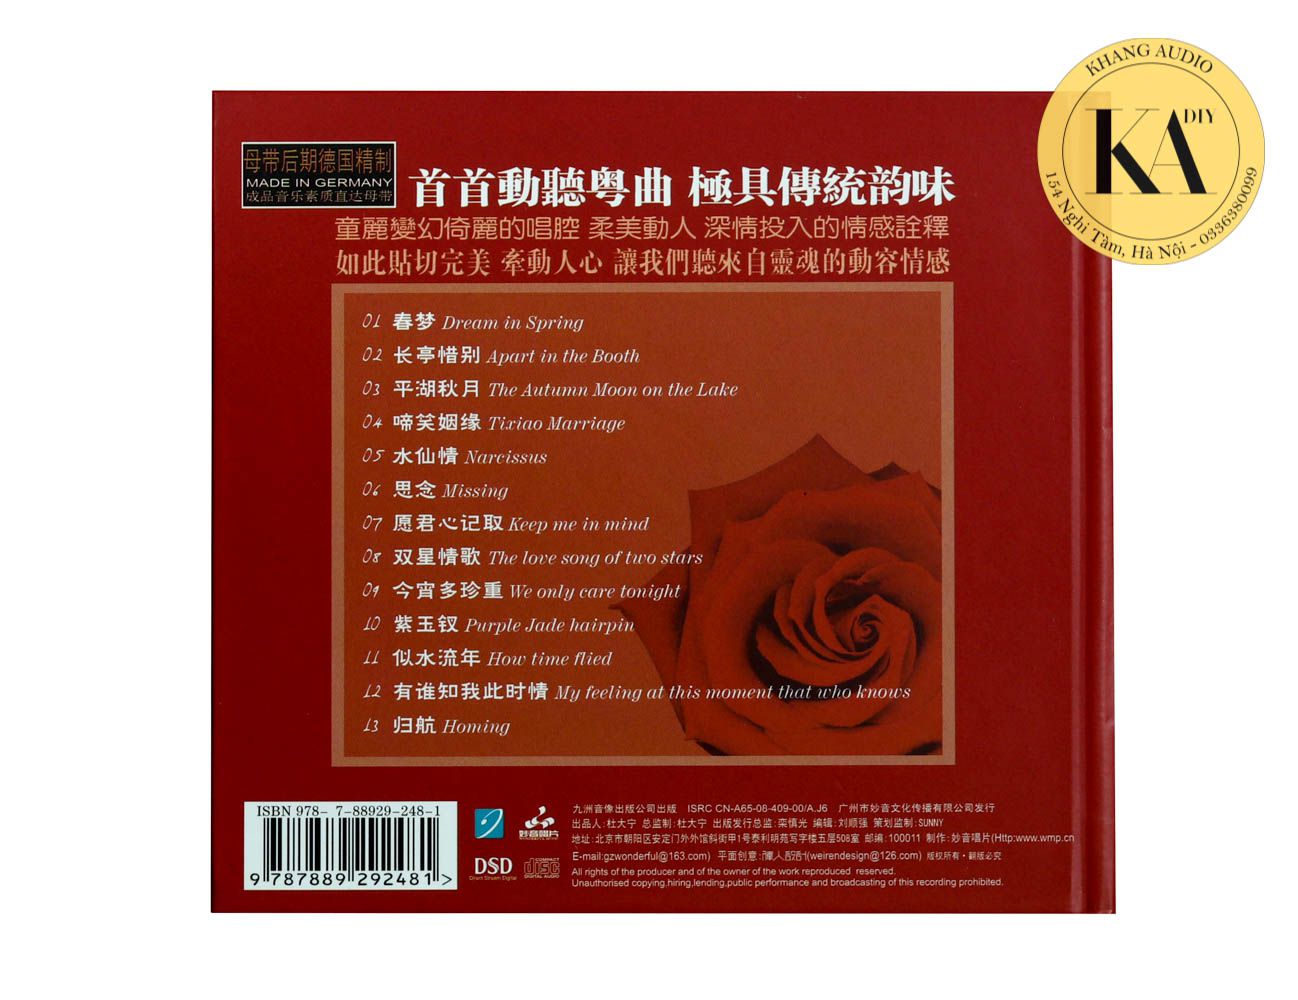 Tixiao Marriage - Audiophile Music Khang Audio 0336380099